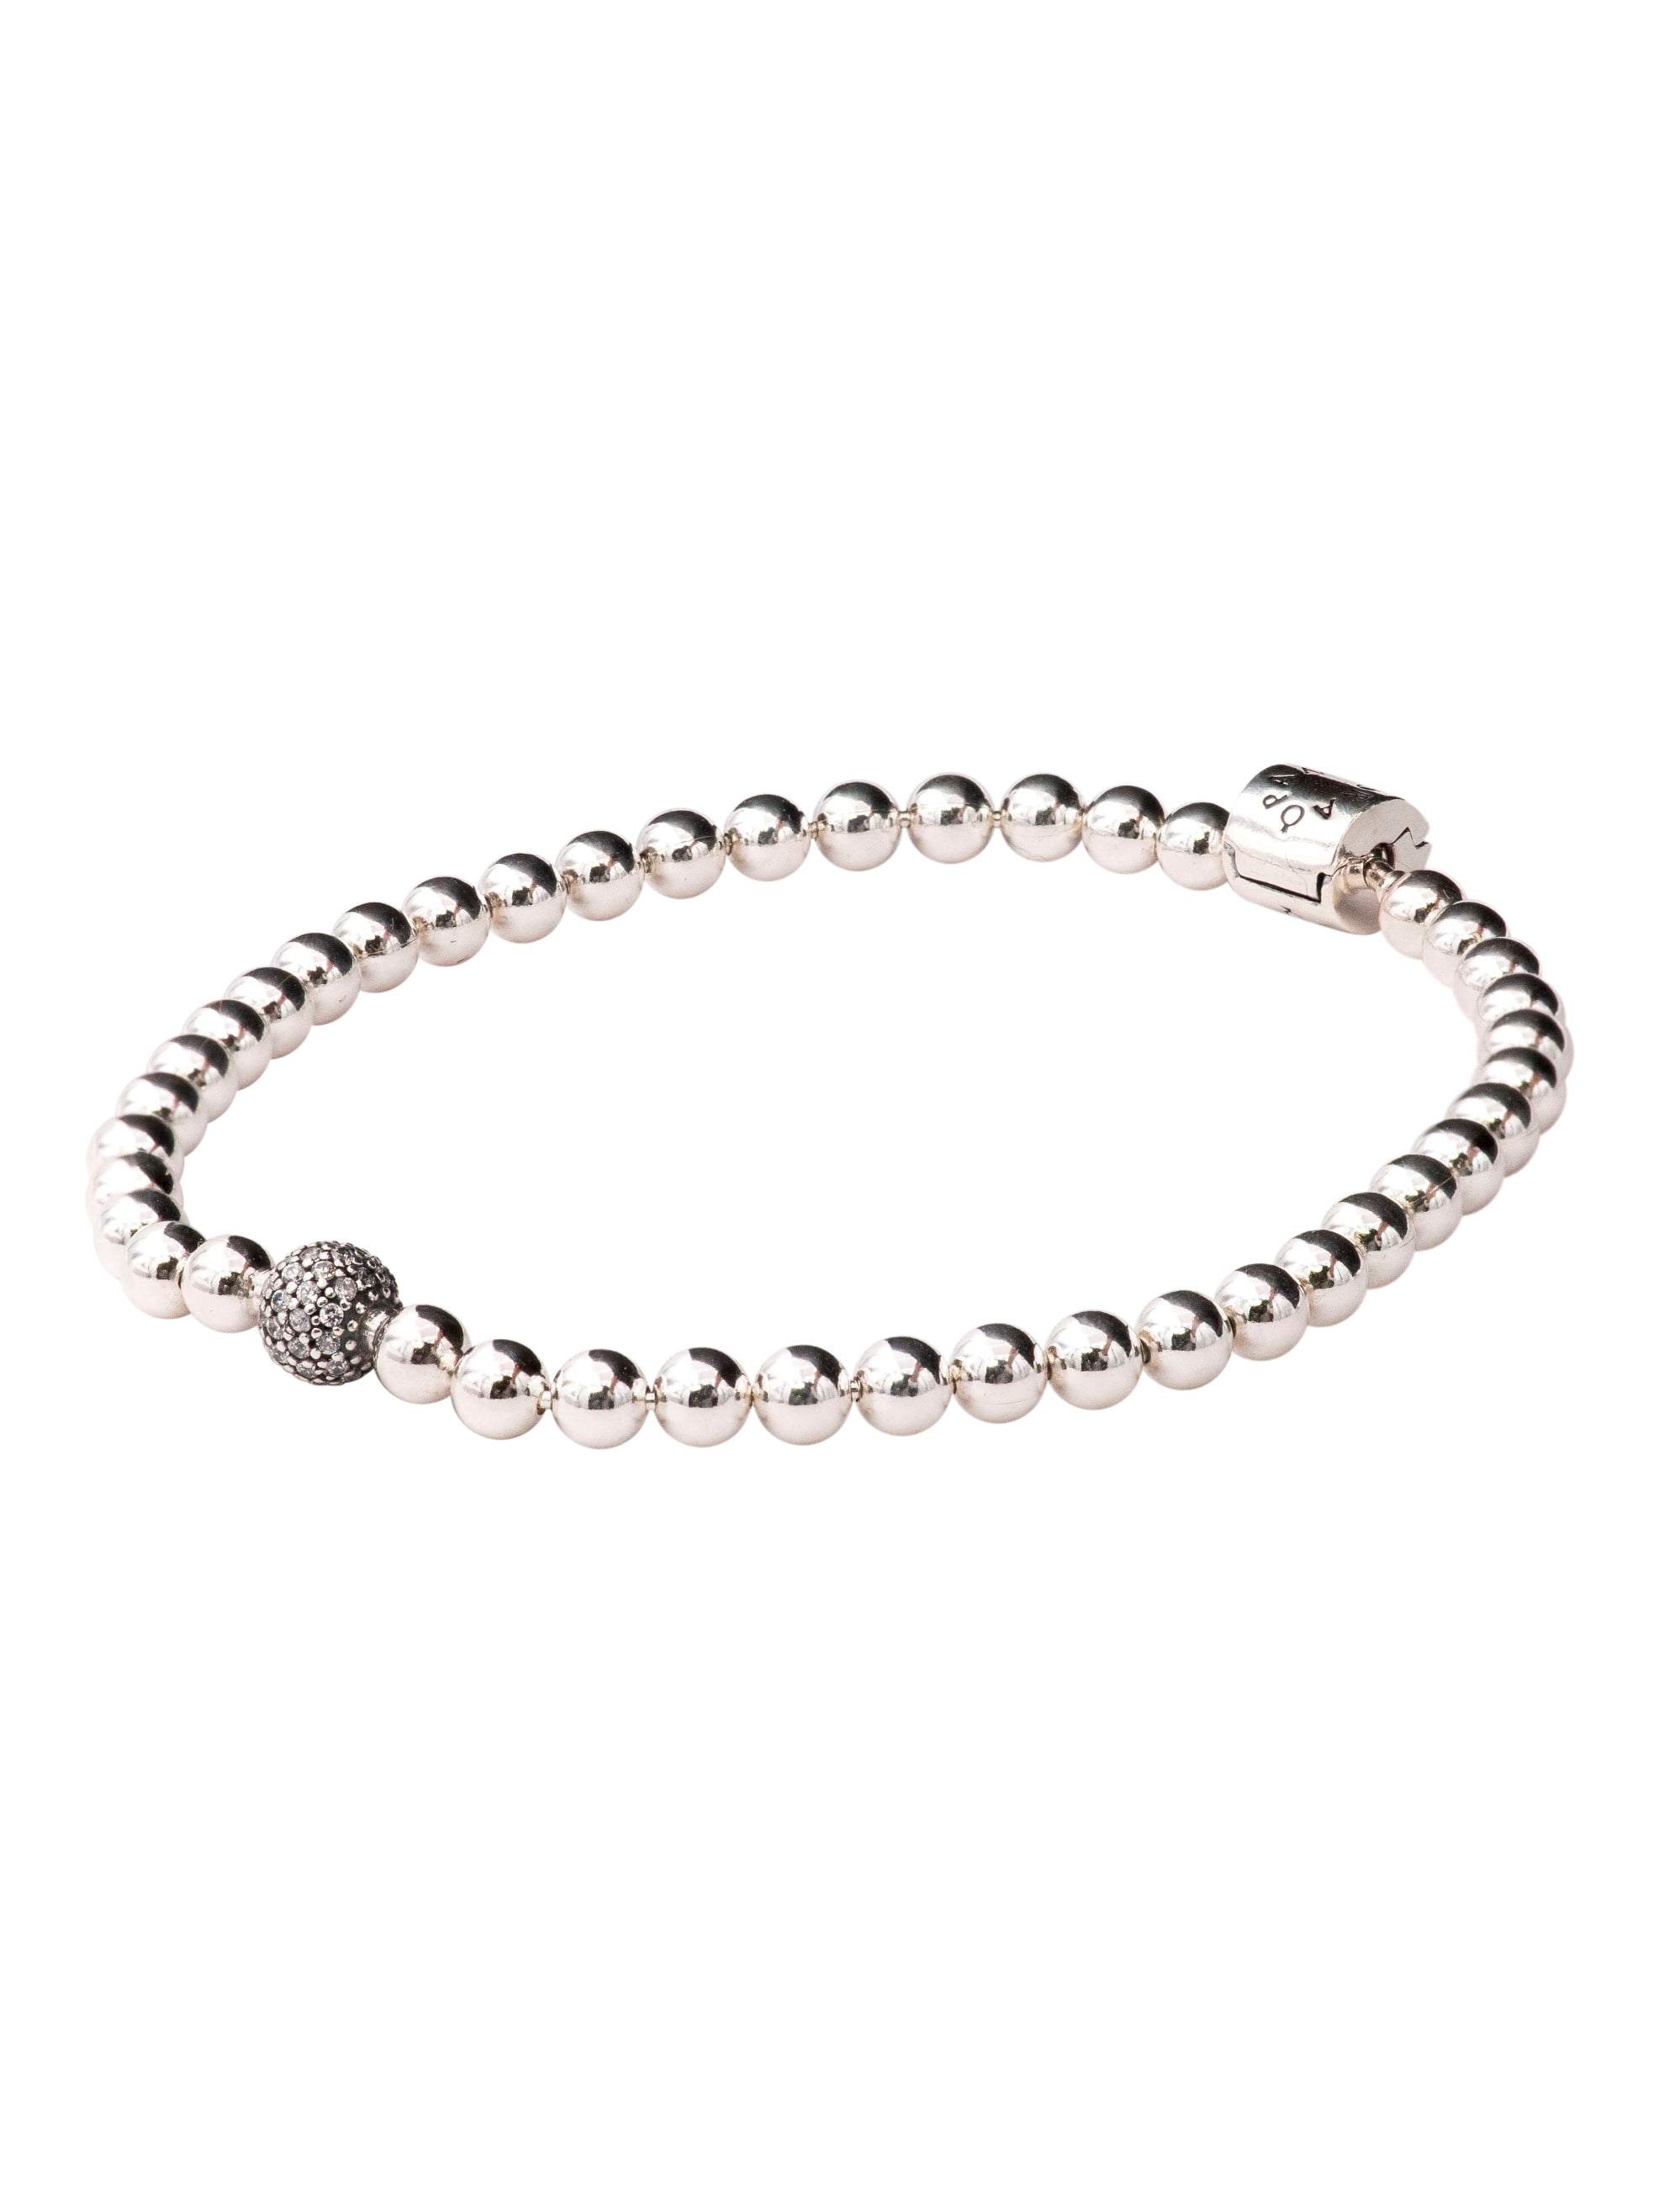 PANDORA - PANDORA Beads & Pave Bracelet Size 19 - 598342CZ-19 - Walmart